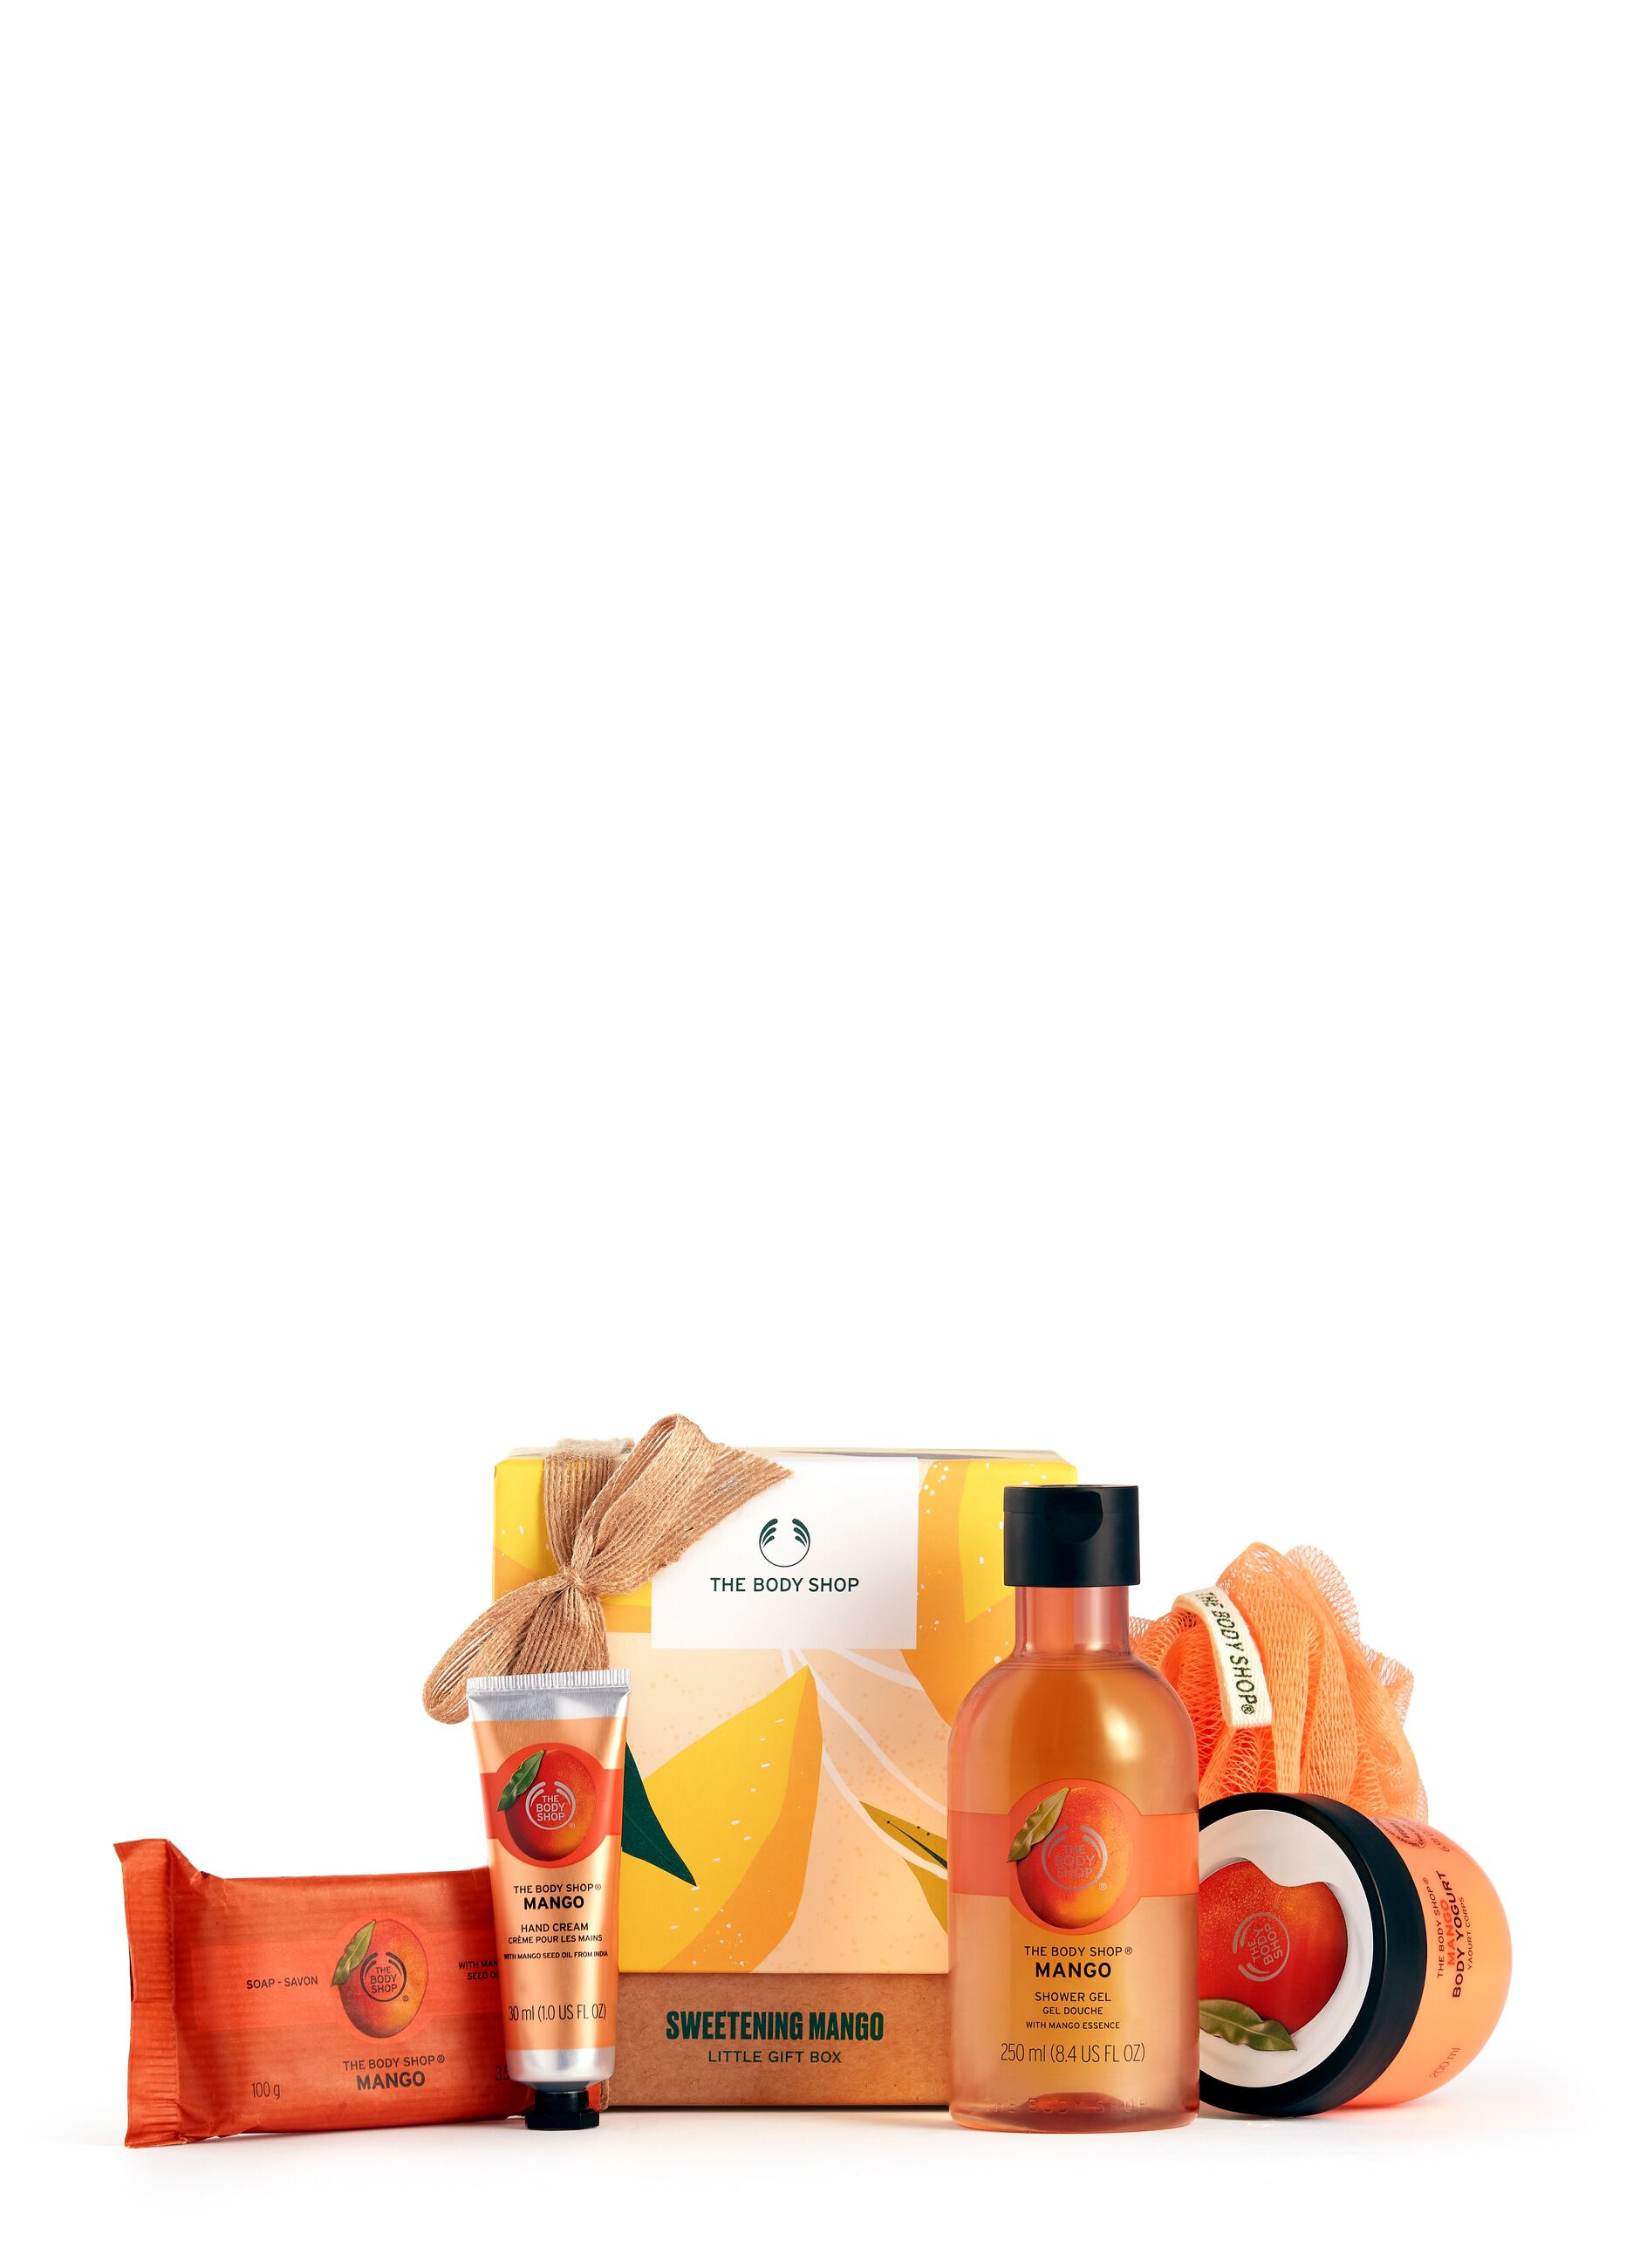 The Body Shop small mango gift box